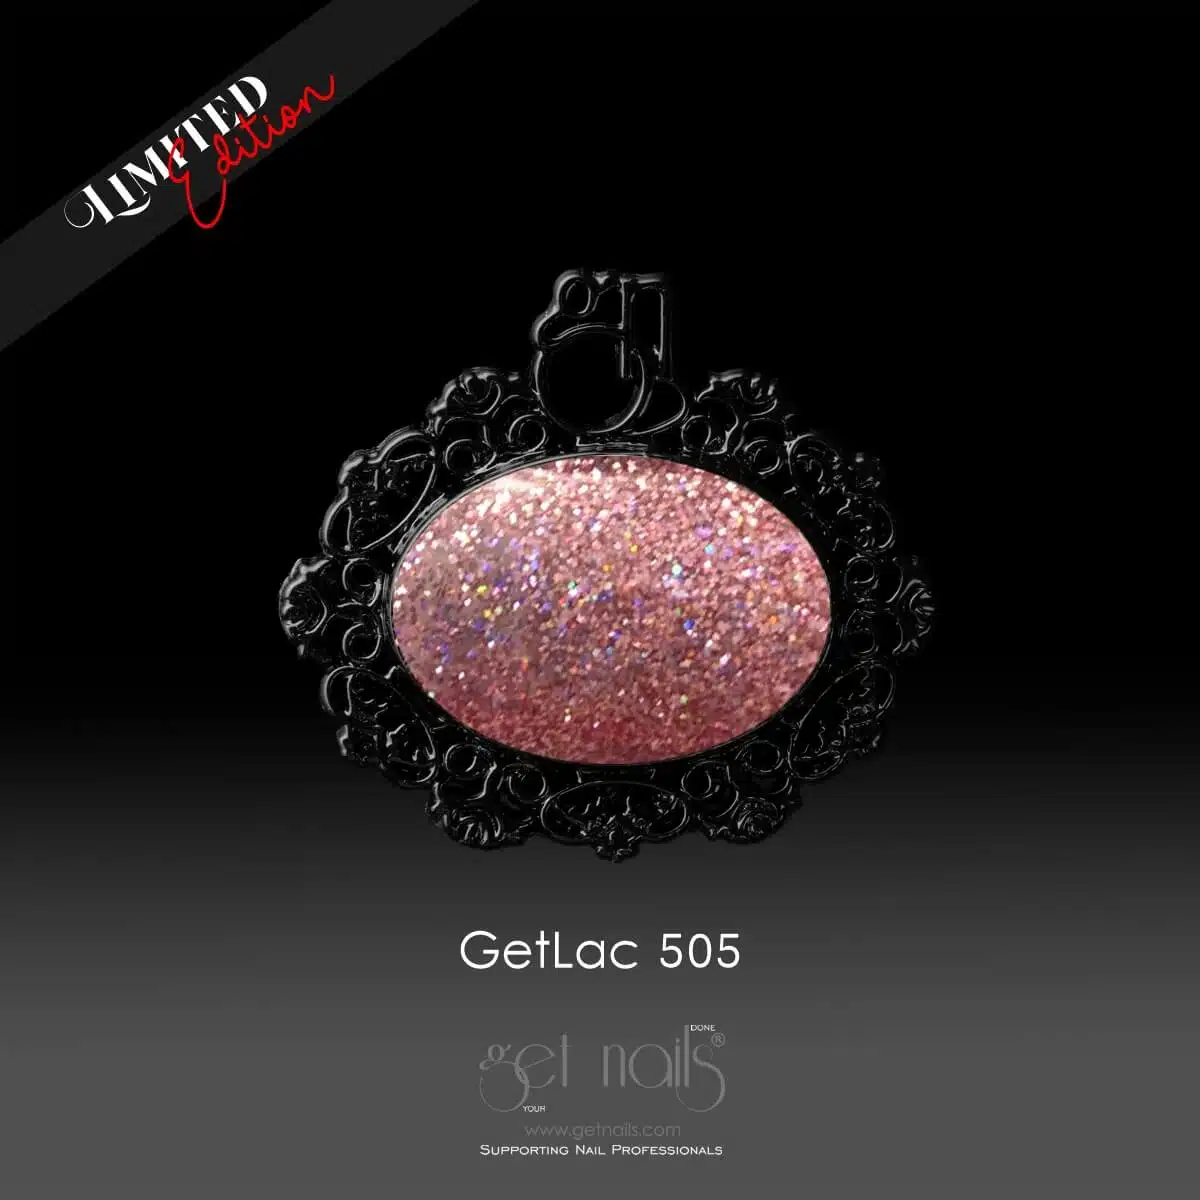 Get Nails Austria – GetLac 505